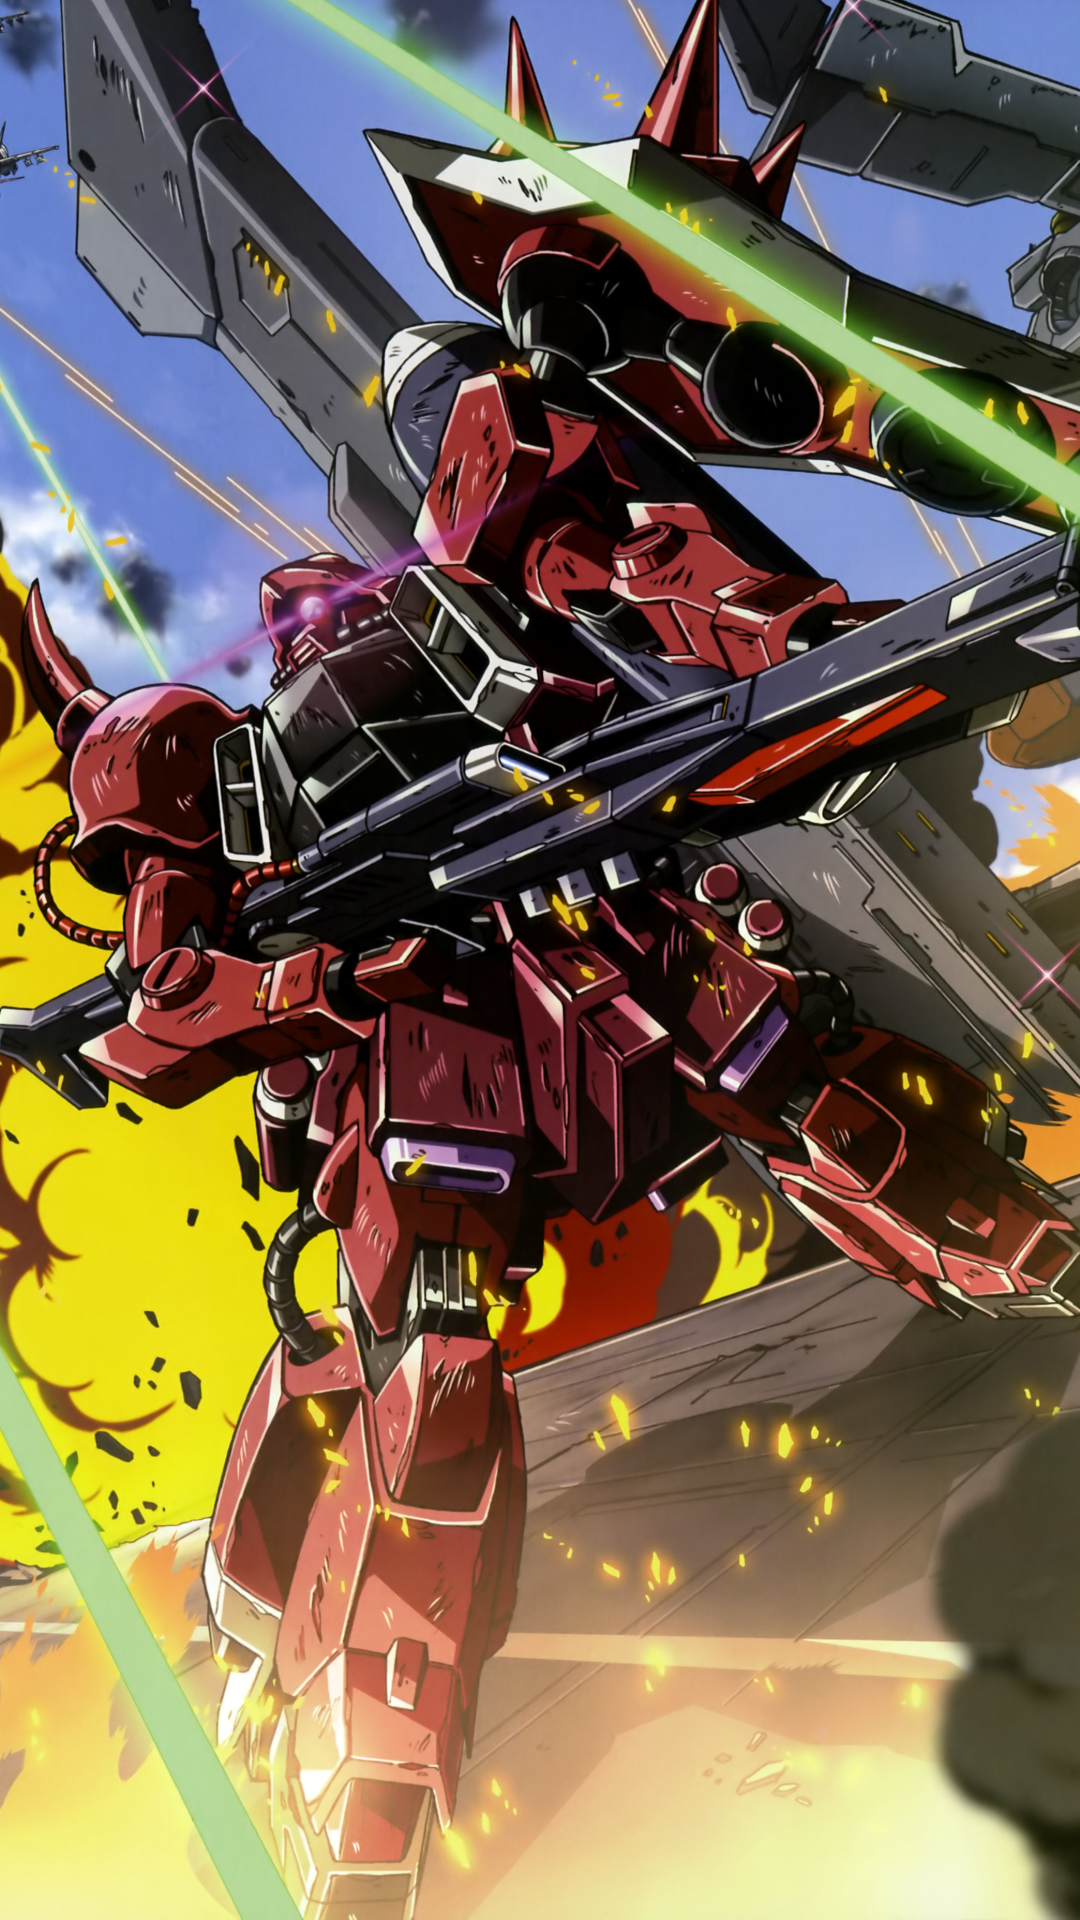 Anime Mobile Suit Gundam Seed Destiny 1080x1920 Wallpaper Id